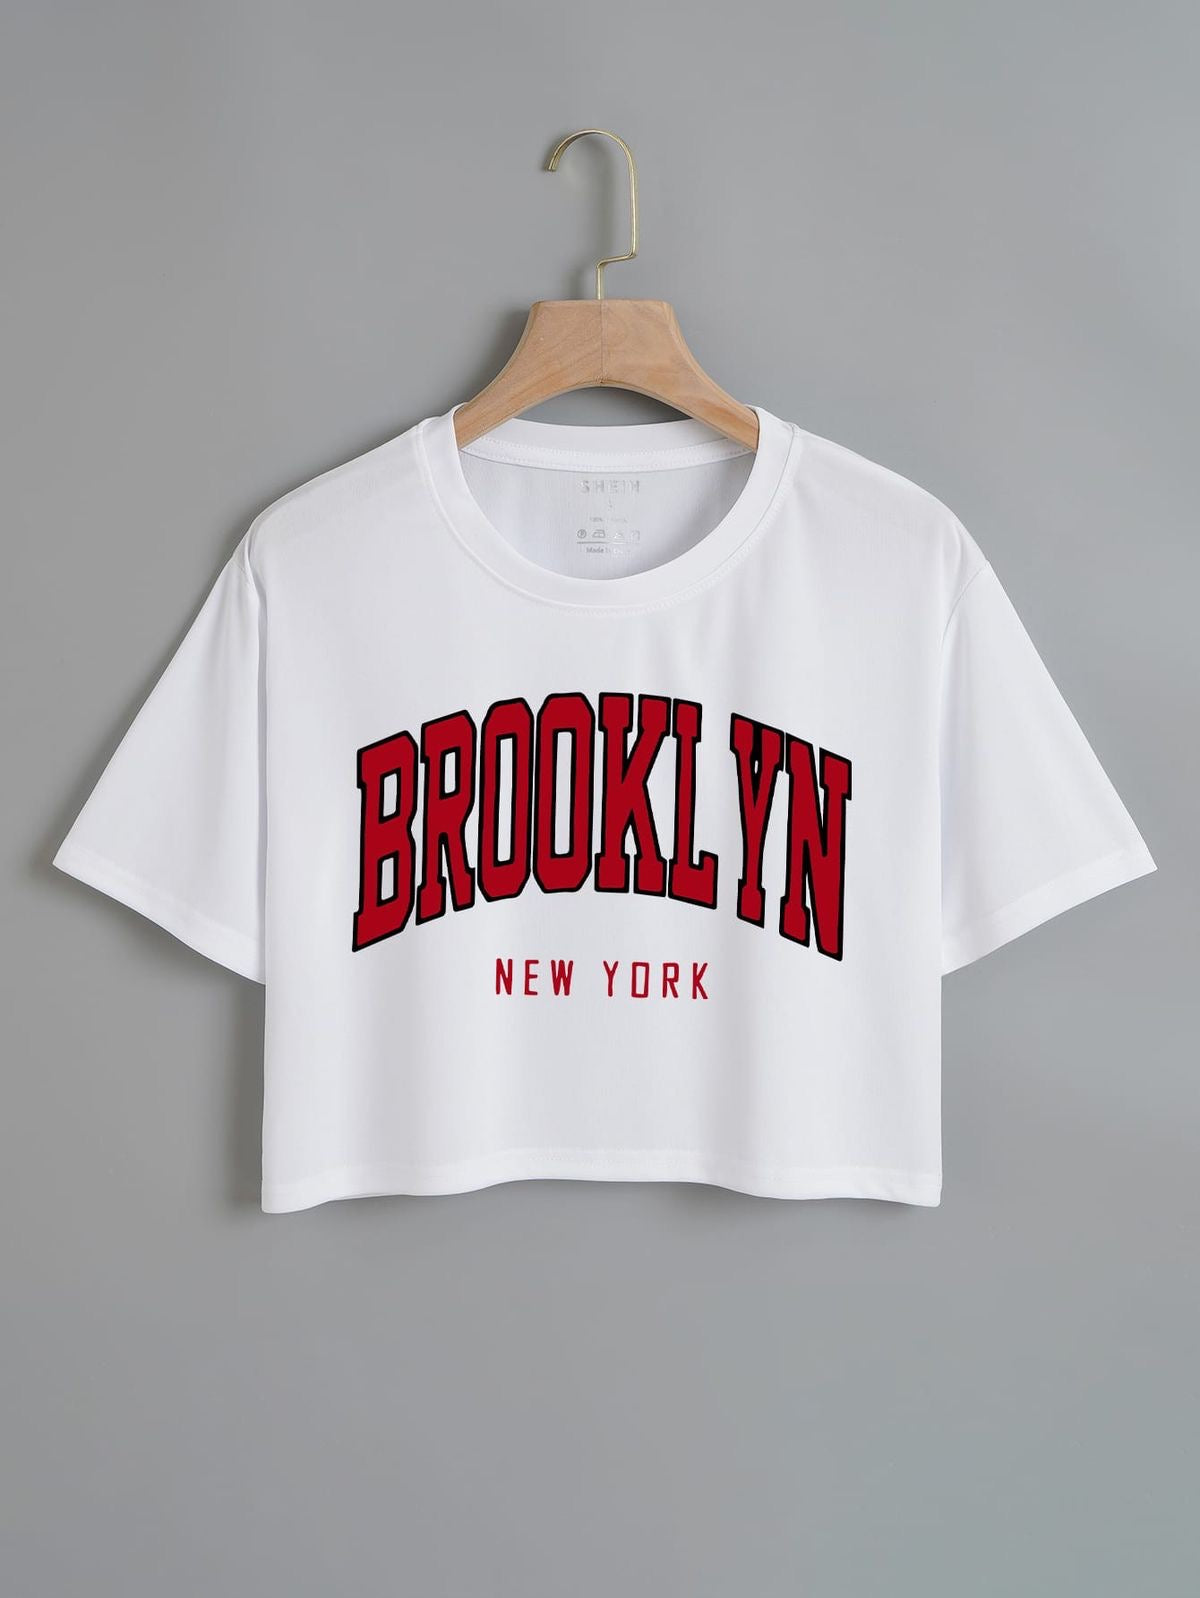 Brooklyn Women Crop Top Cotton